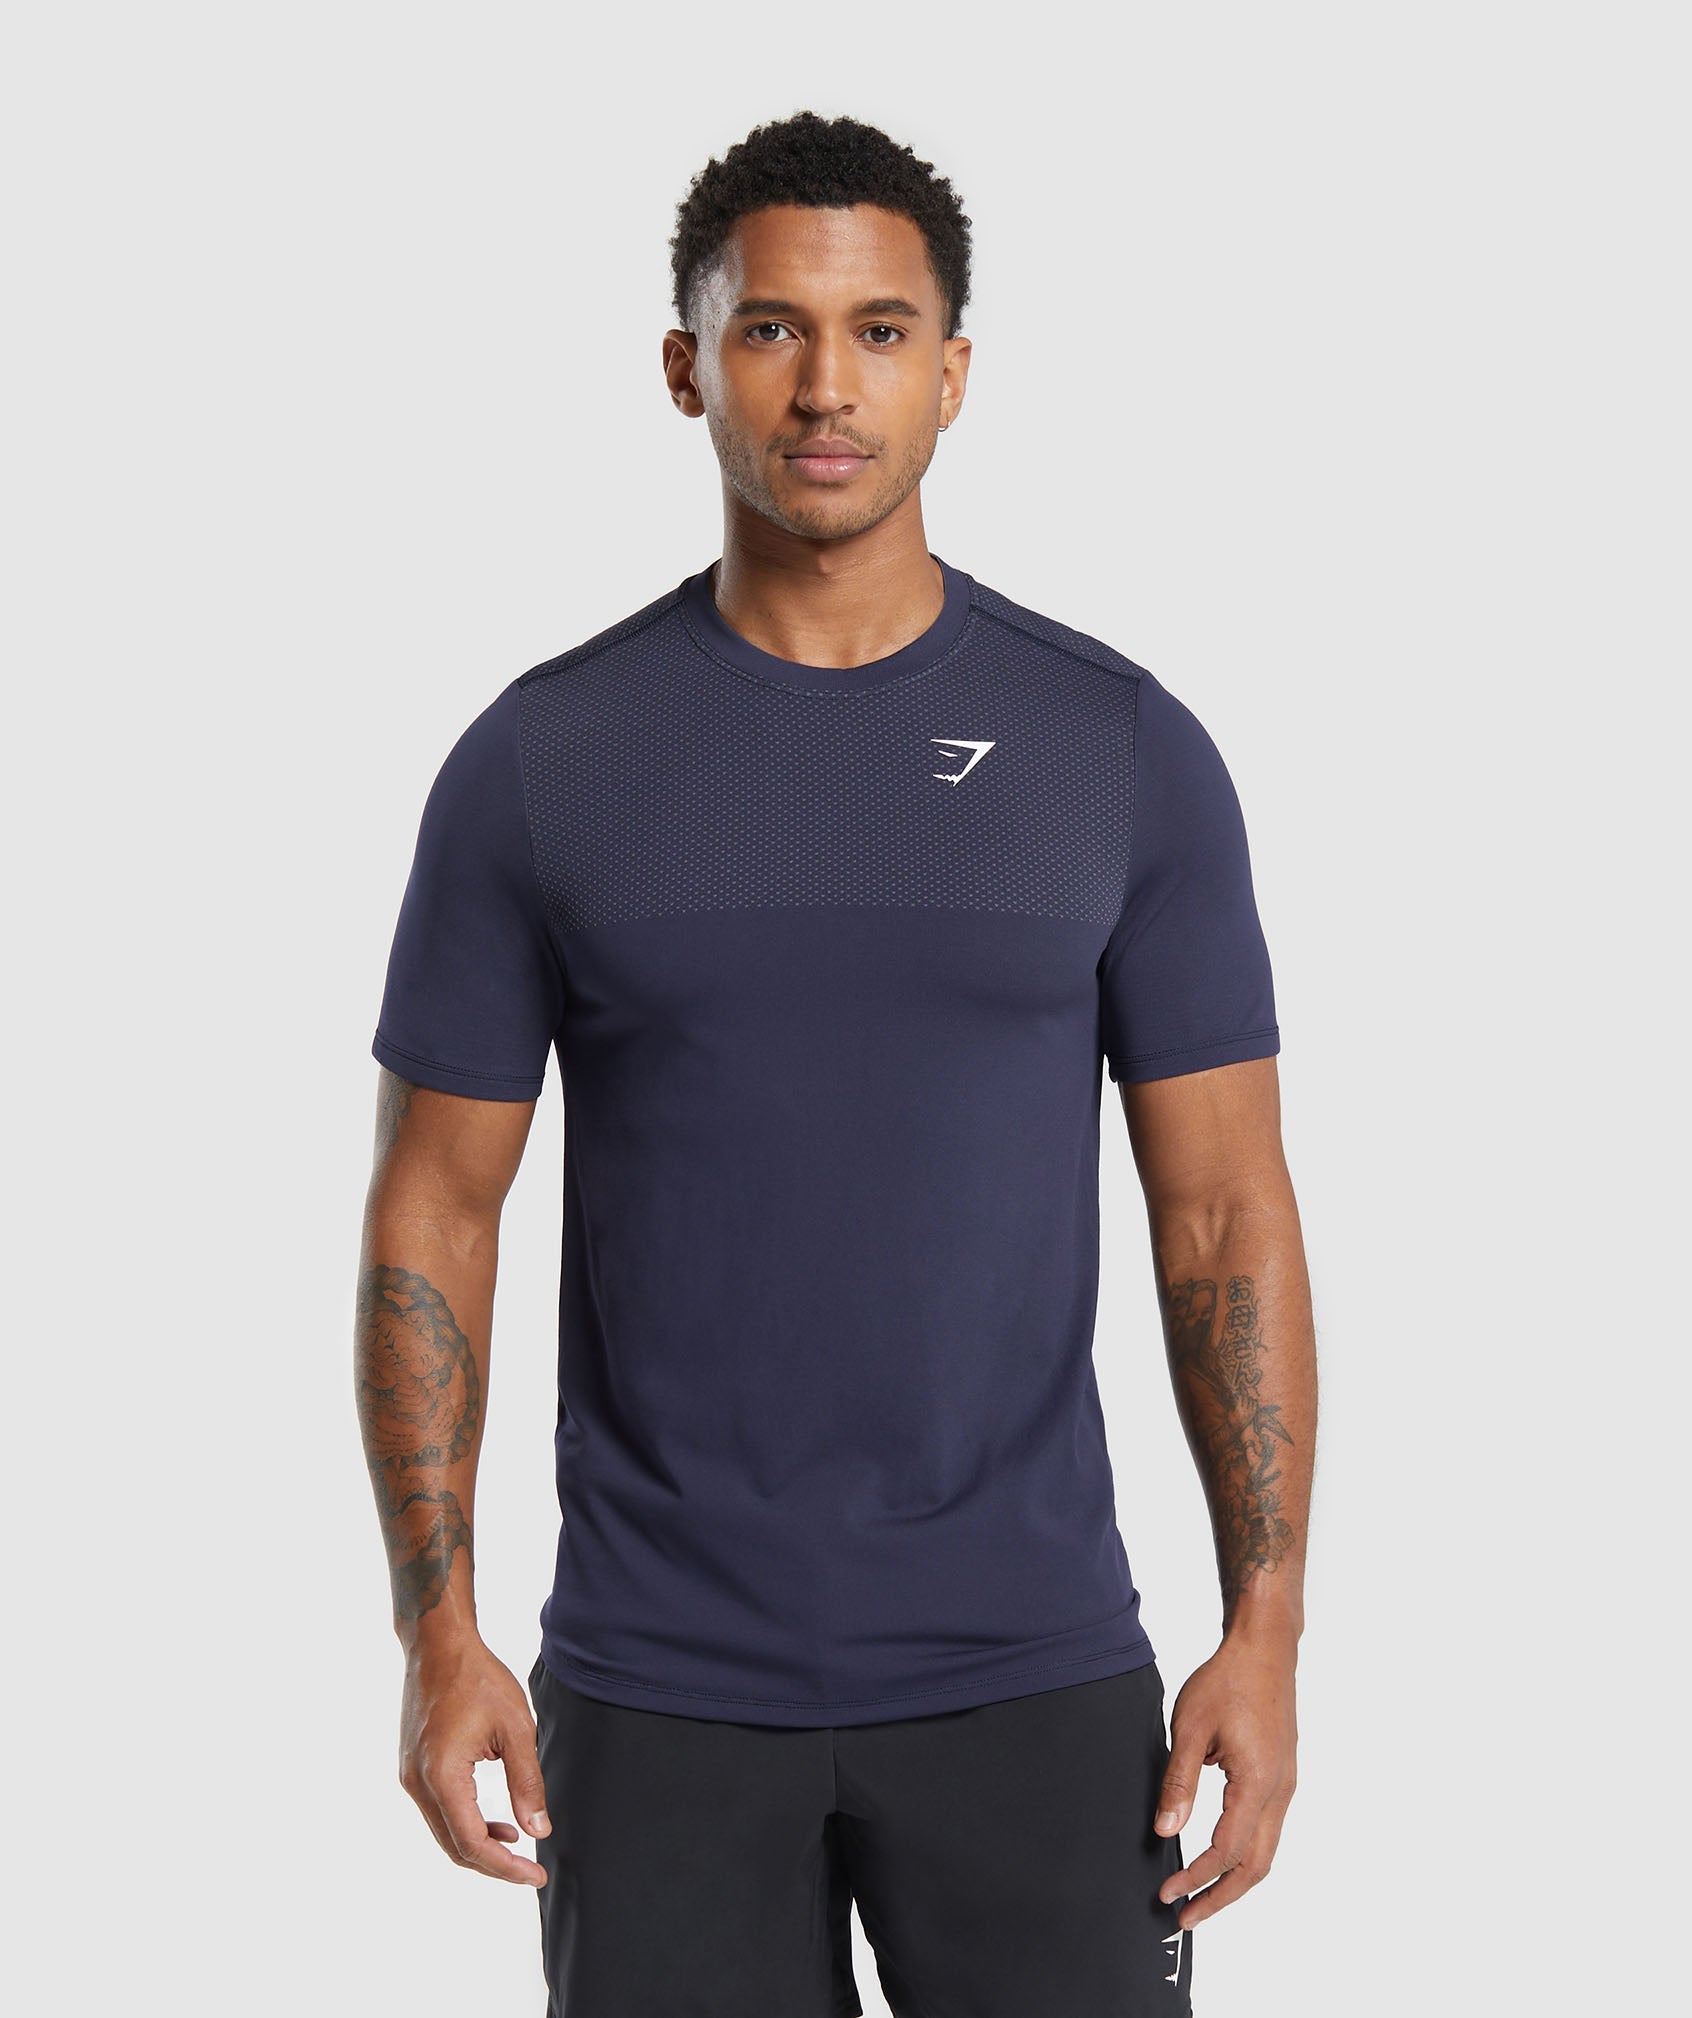 Vital Seamless T-Shirt in Navy/Light Grey - view 1